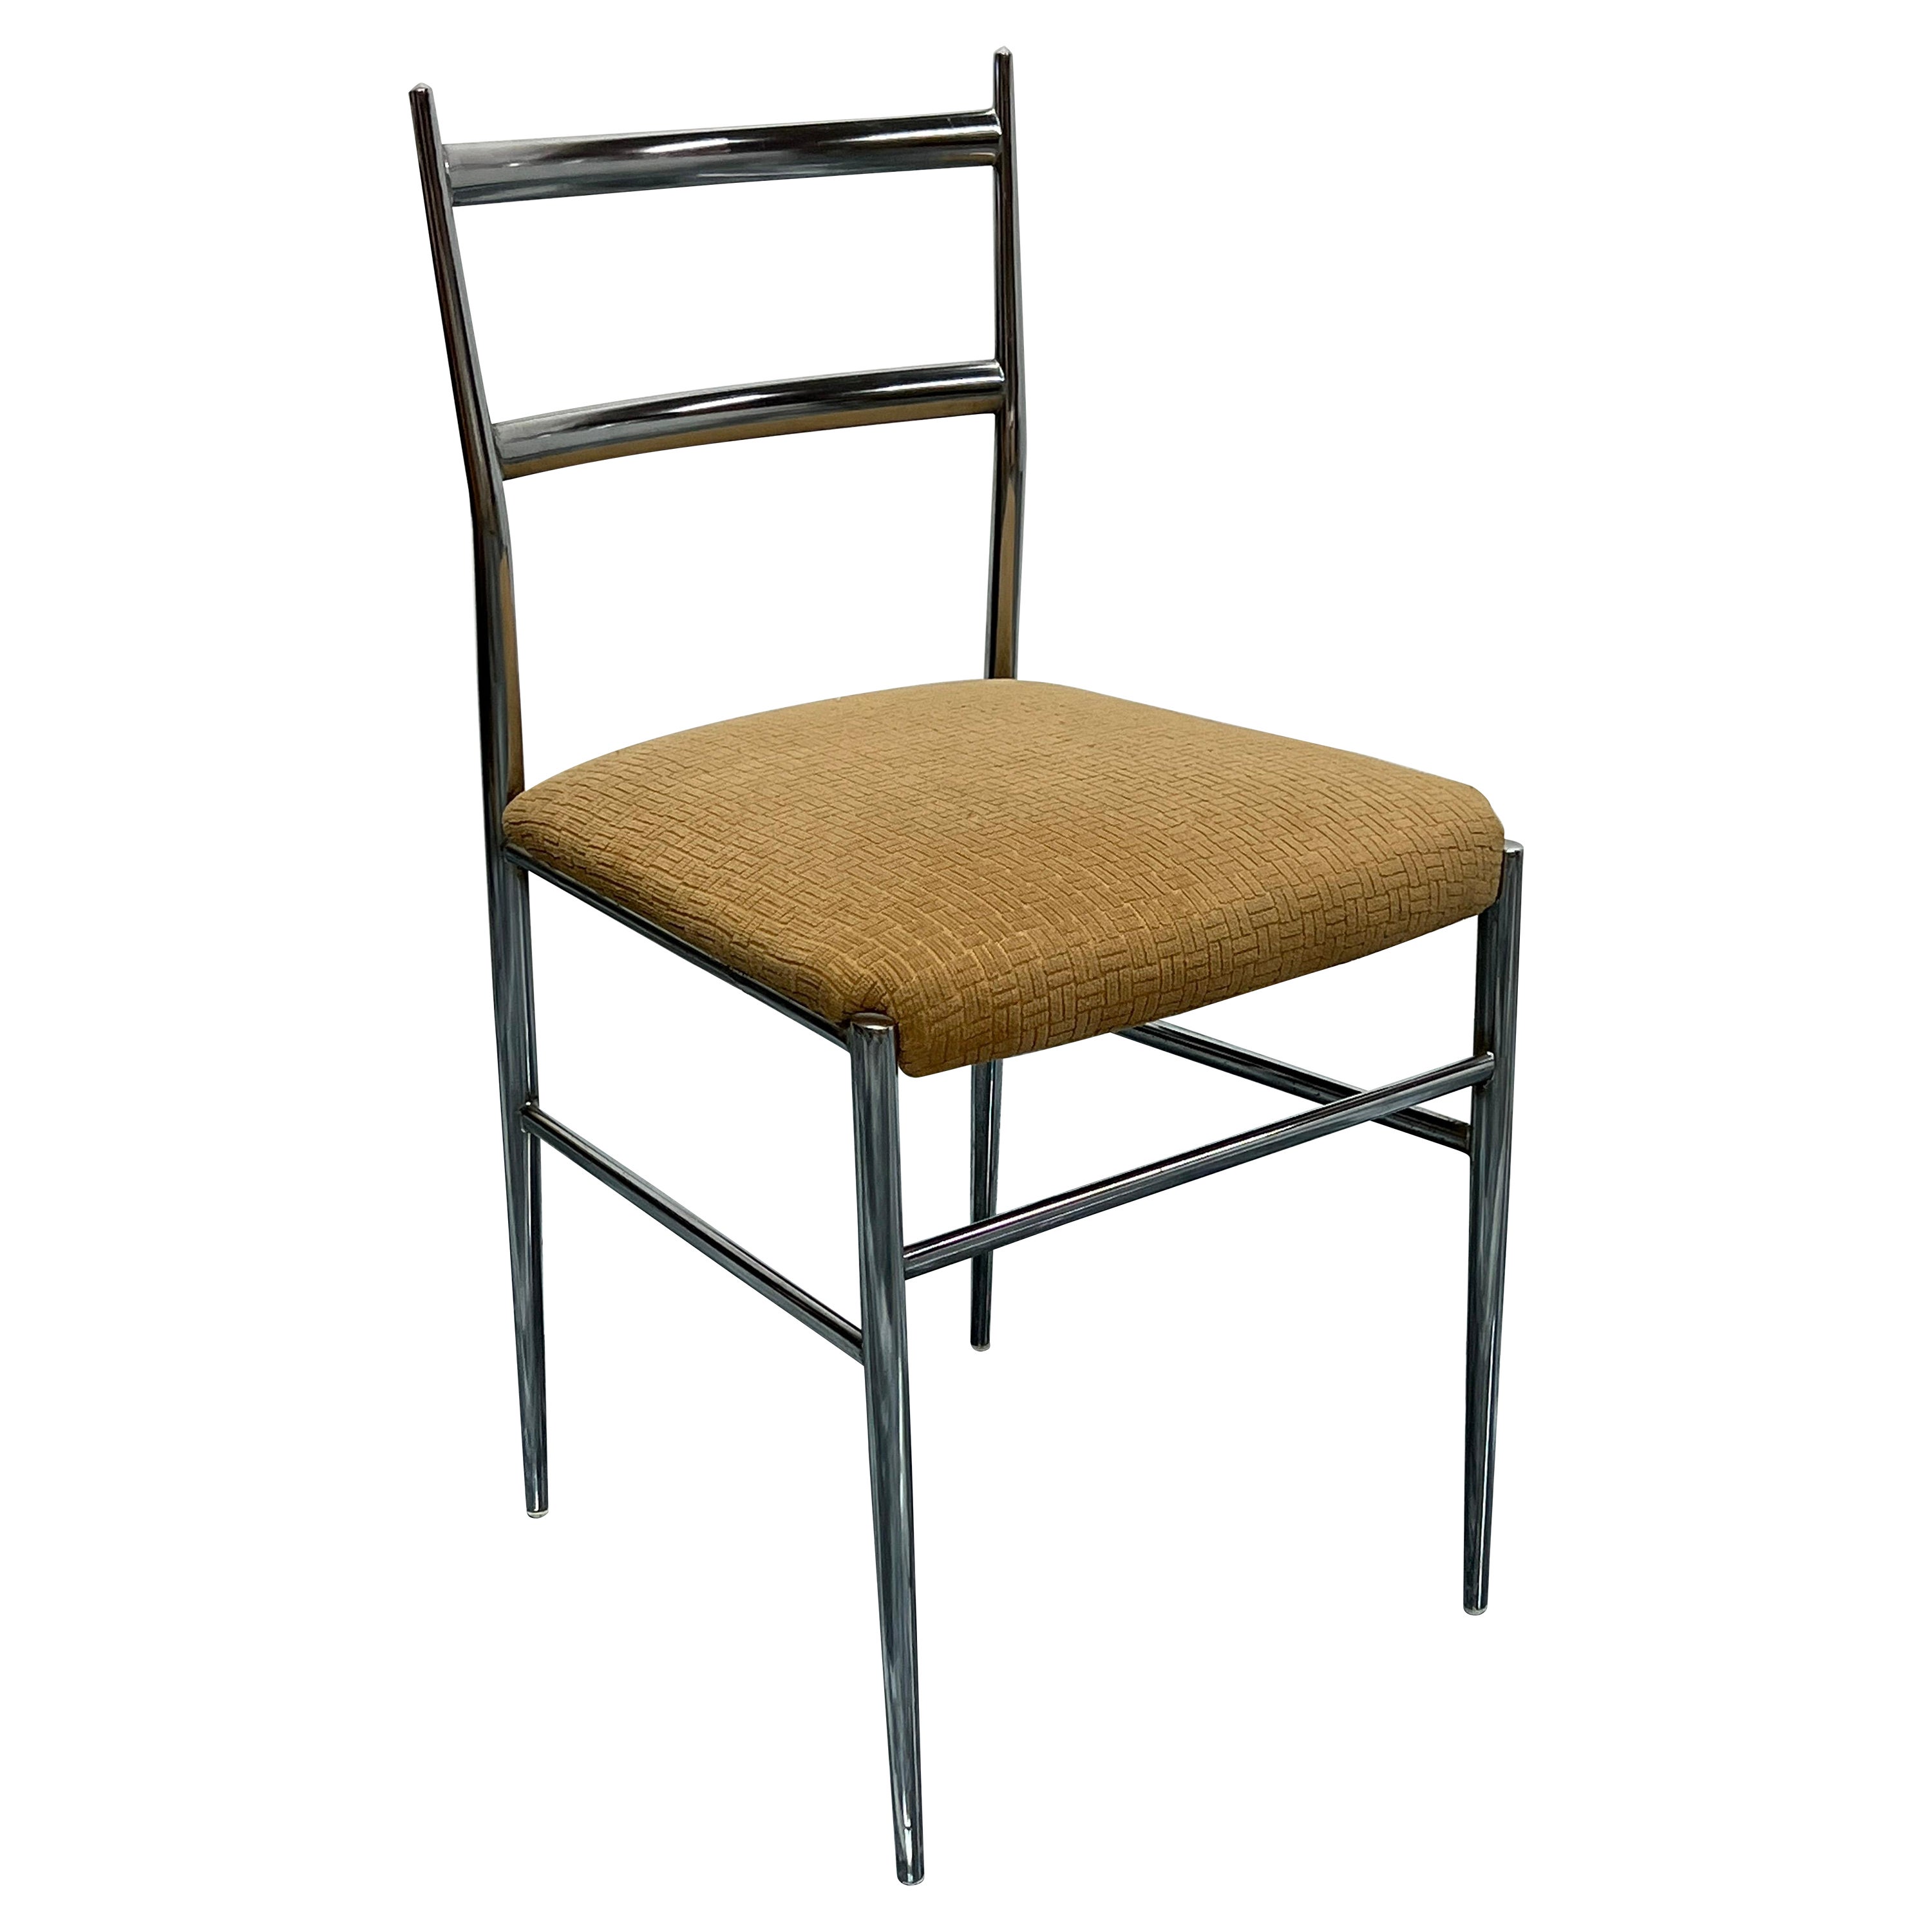 Philippe Starck "Objet Perdu" Style Chair